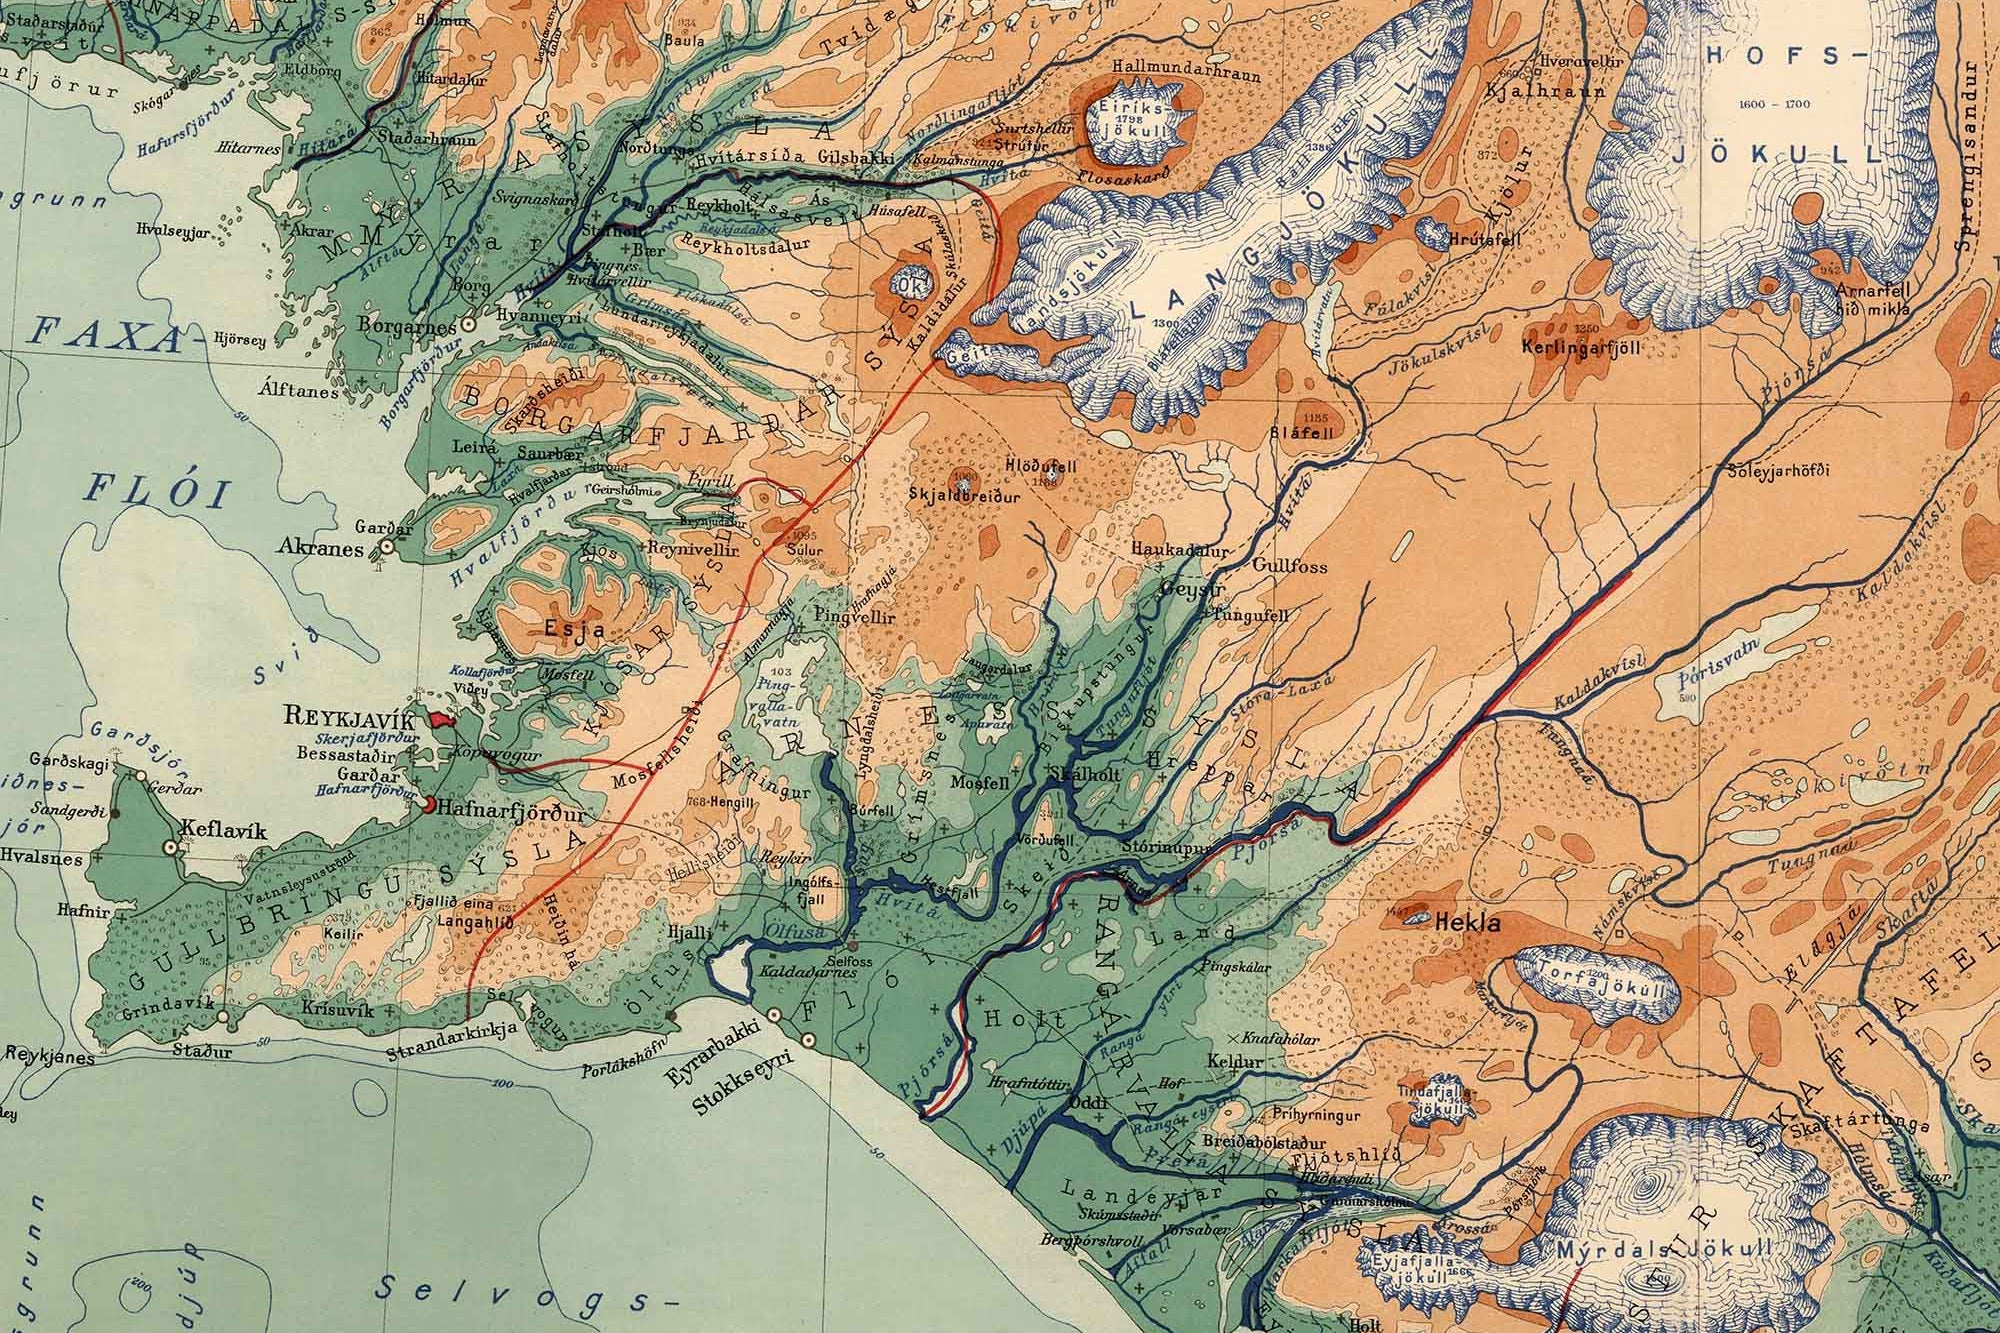 reykjavik on a map of iceland